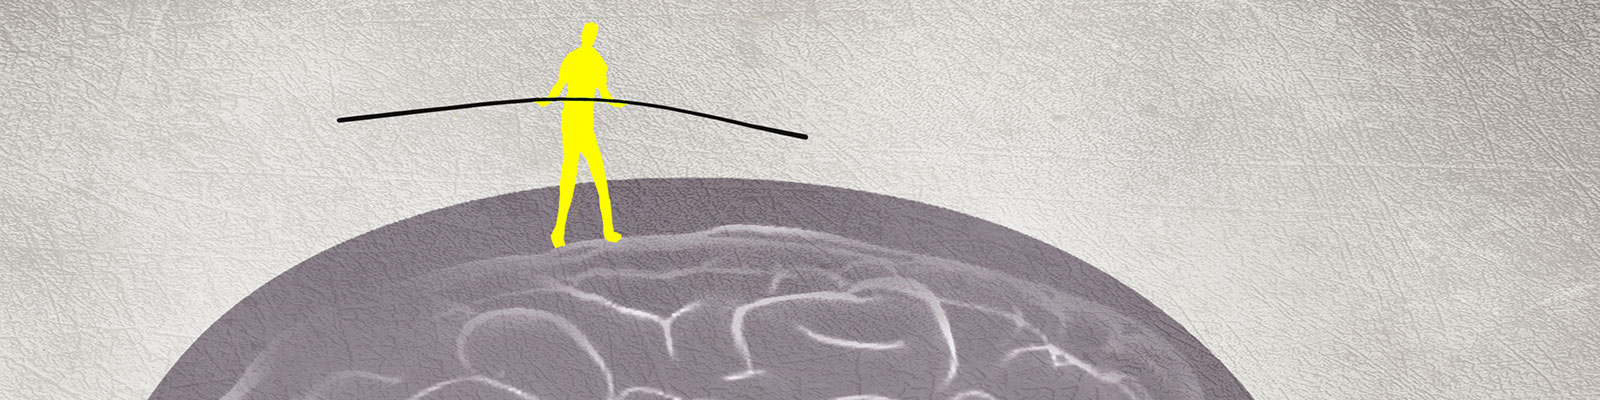 illustration of a figure tightrope walking across a brain